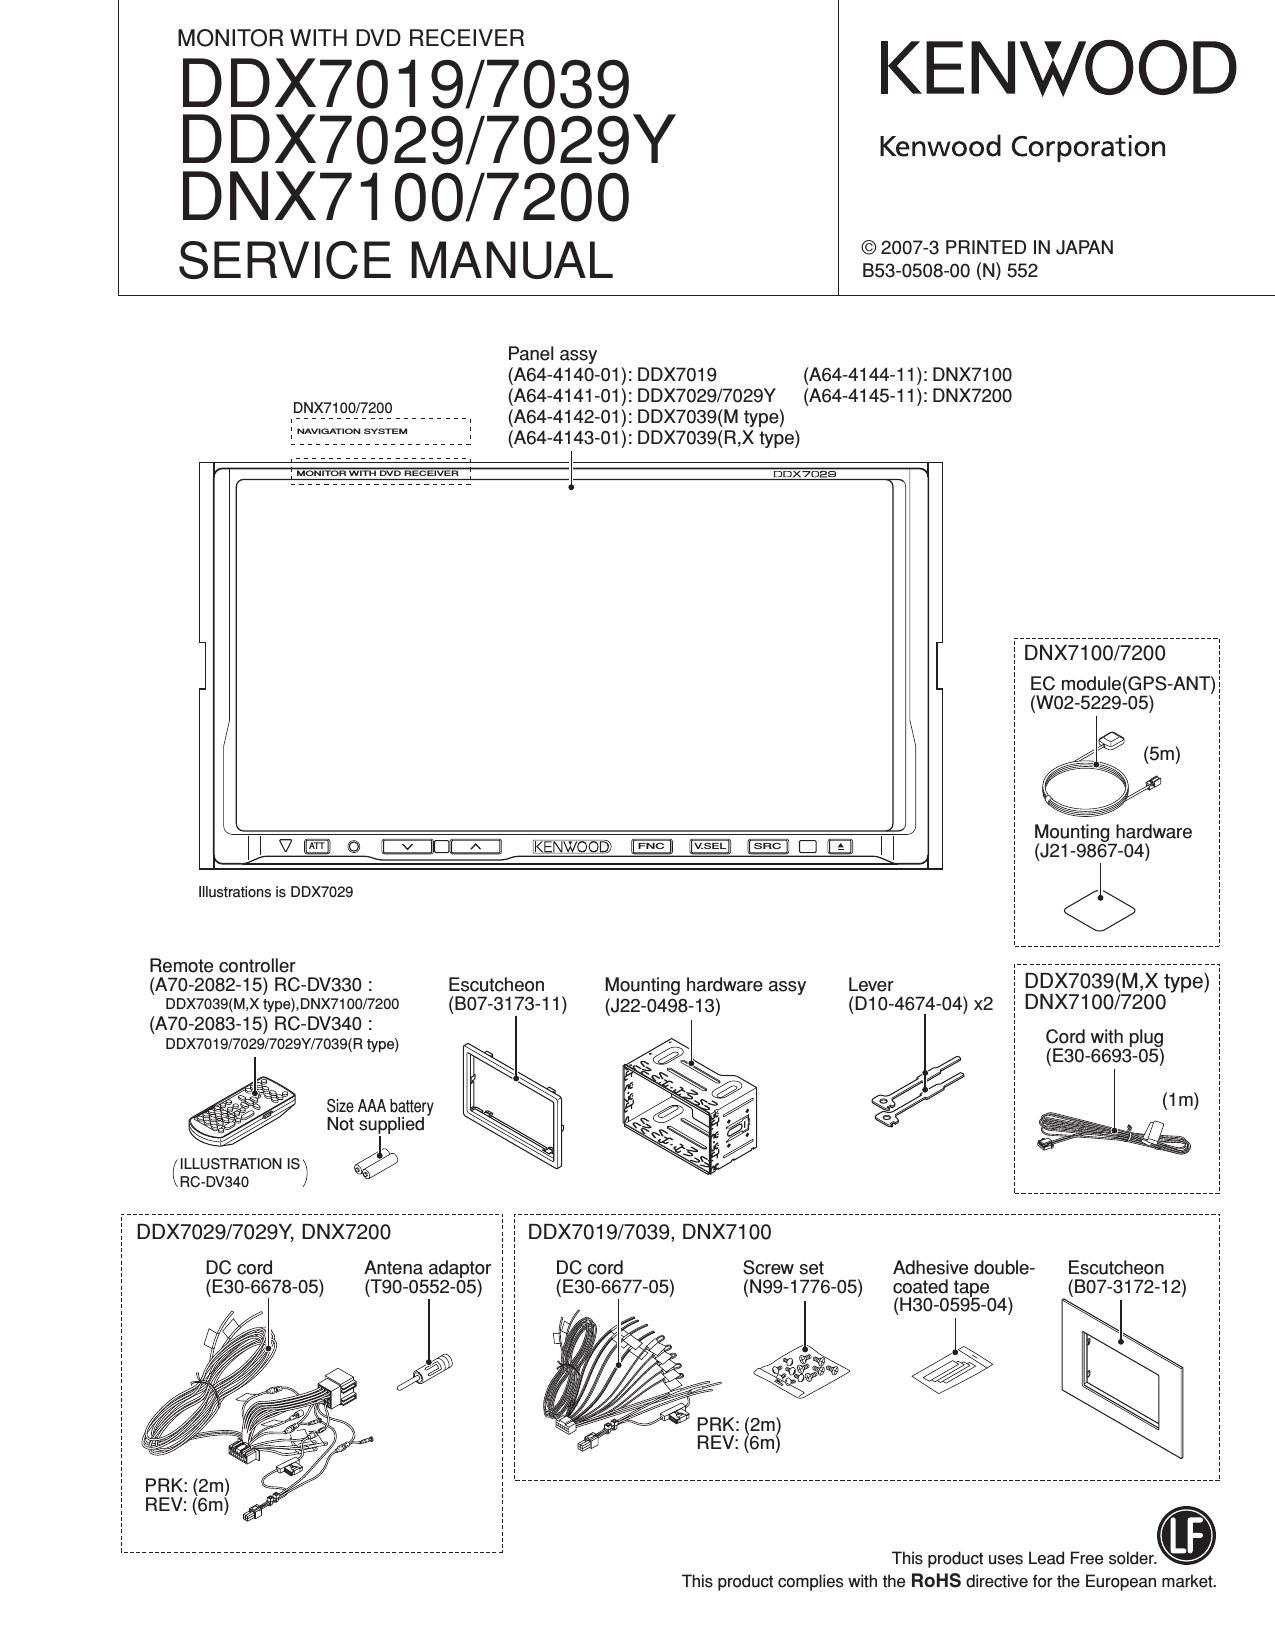 Kenwood DDX 7029 HU Service Manual